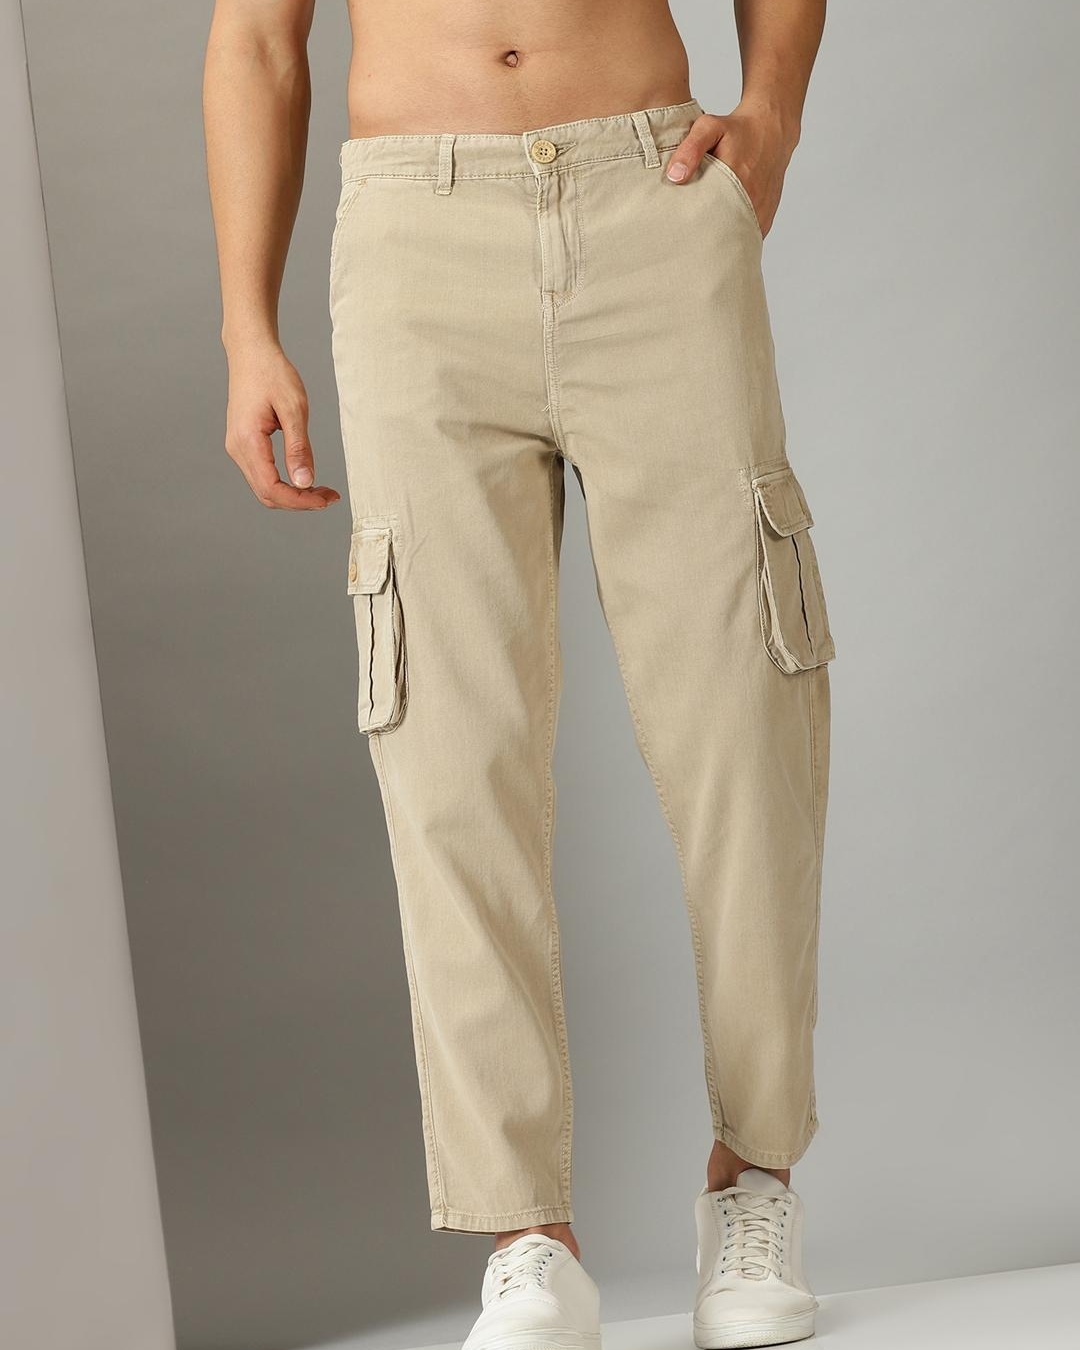 https://images.bewakoof.com/original/men-s-beige-relaxed-fit-cargo-trousers-585707-1680250592-1.jpg